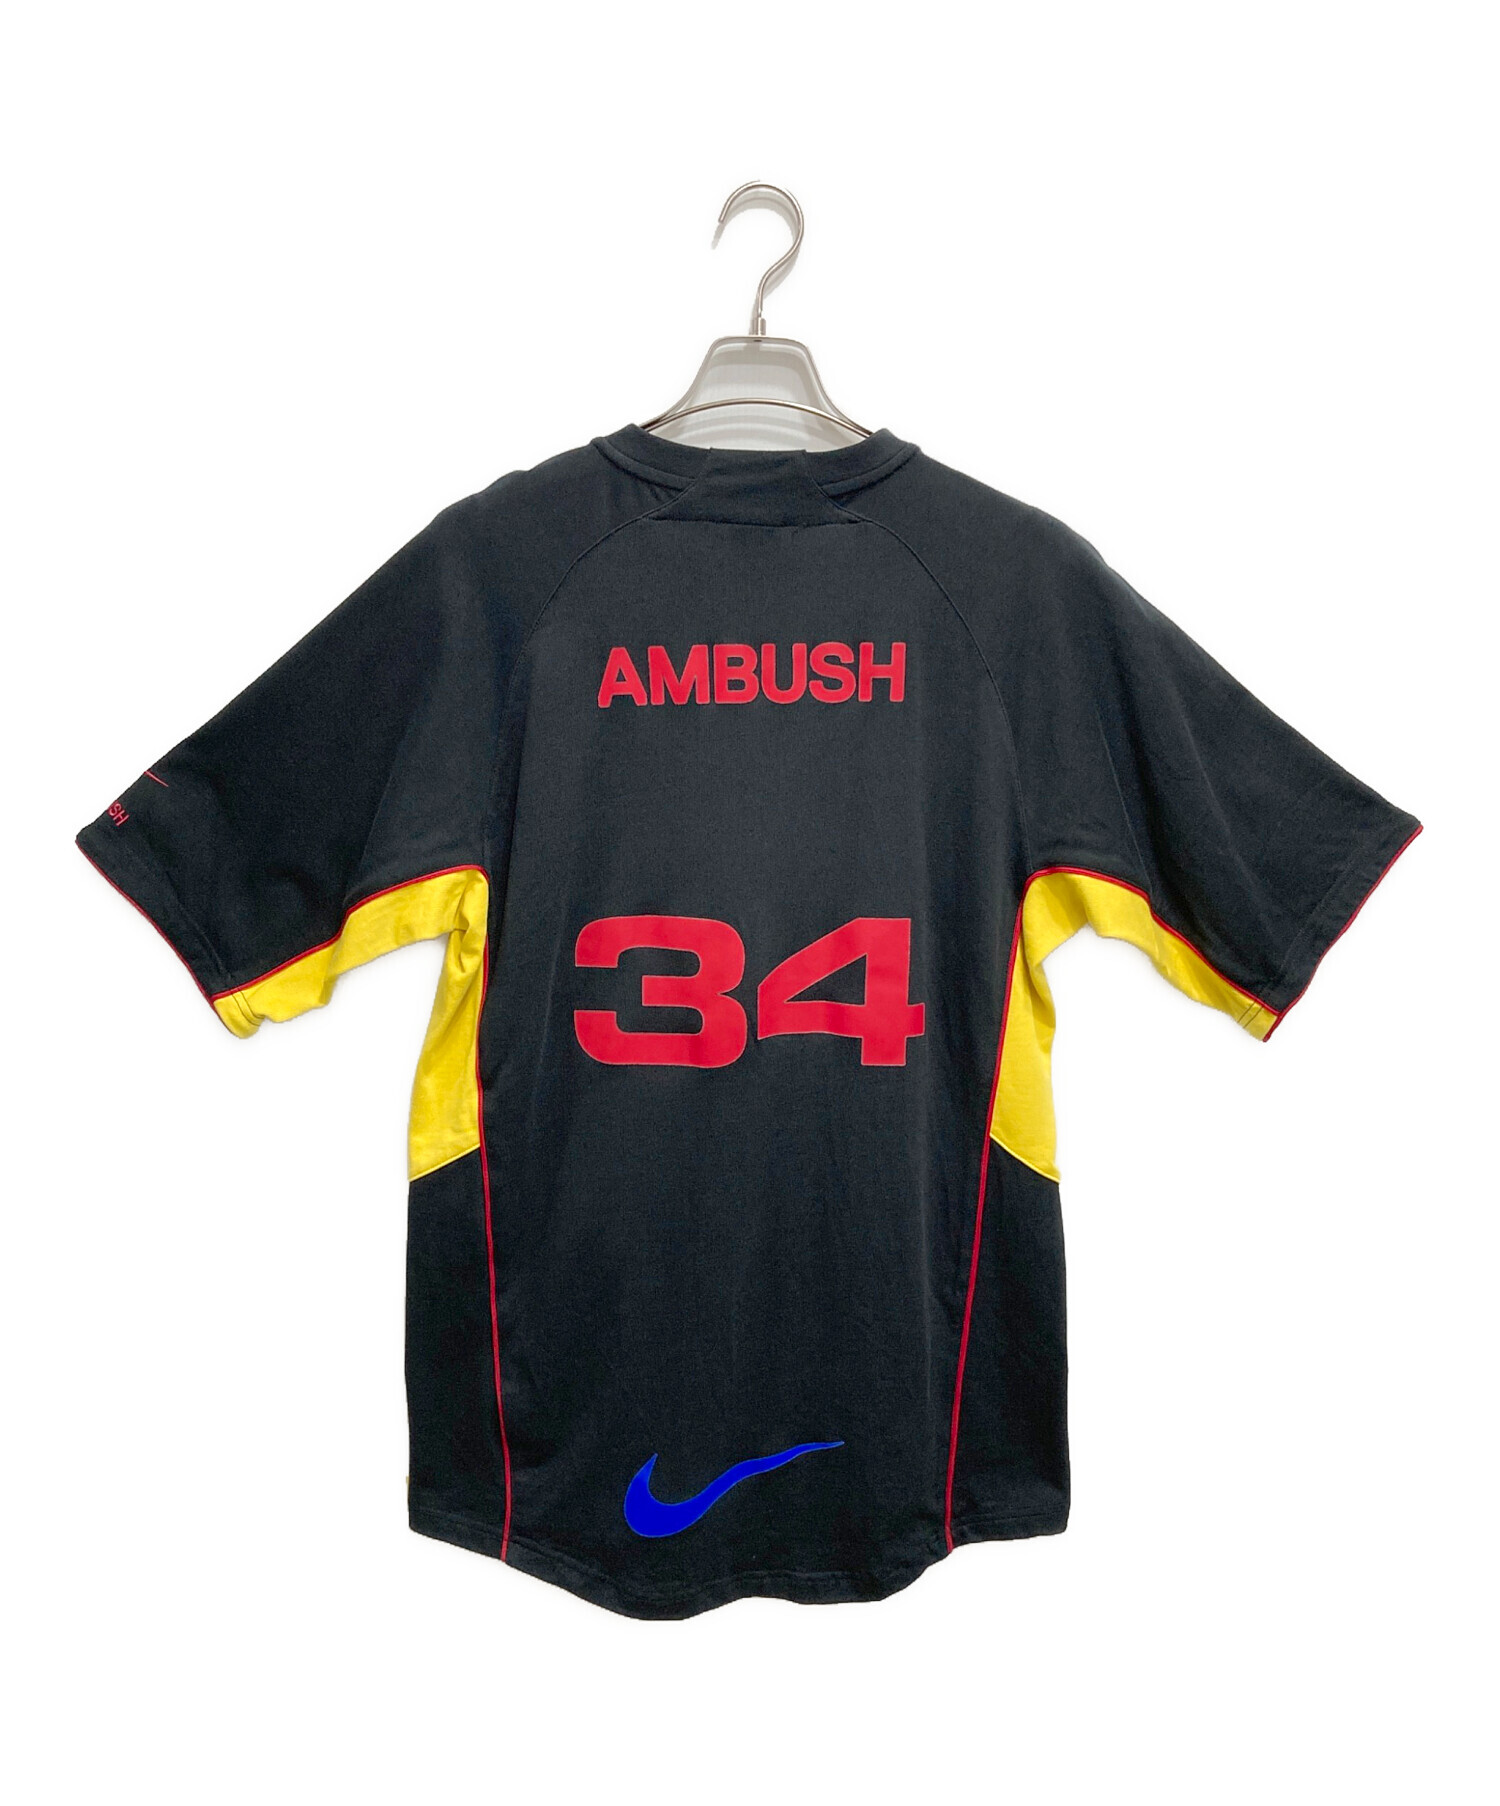 NIKE (ナイキ) AMBUSH (アンブッシュ) Uniform Top ブラック サイズ:L